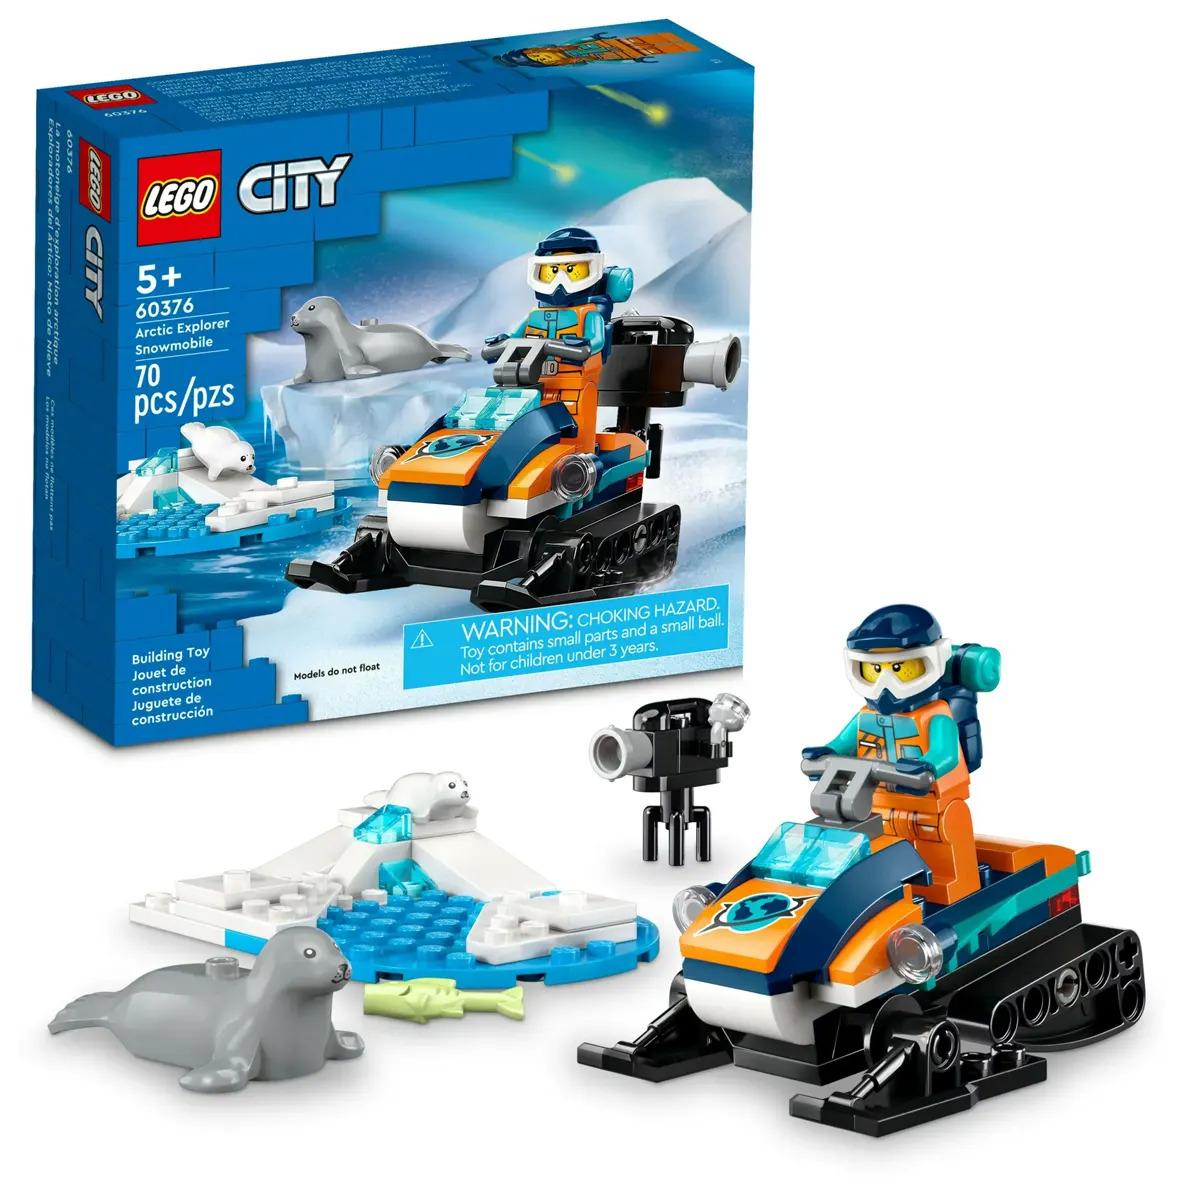 Lego City Arctic Explorer Snowmobile Building Set 60736 for $5.49